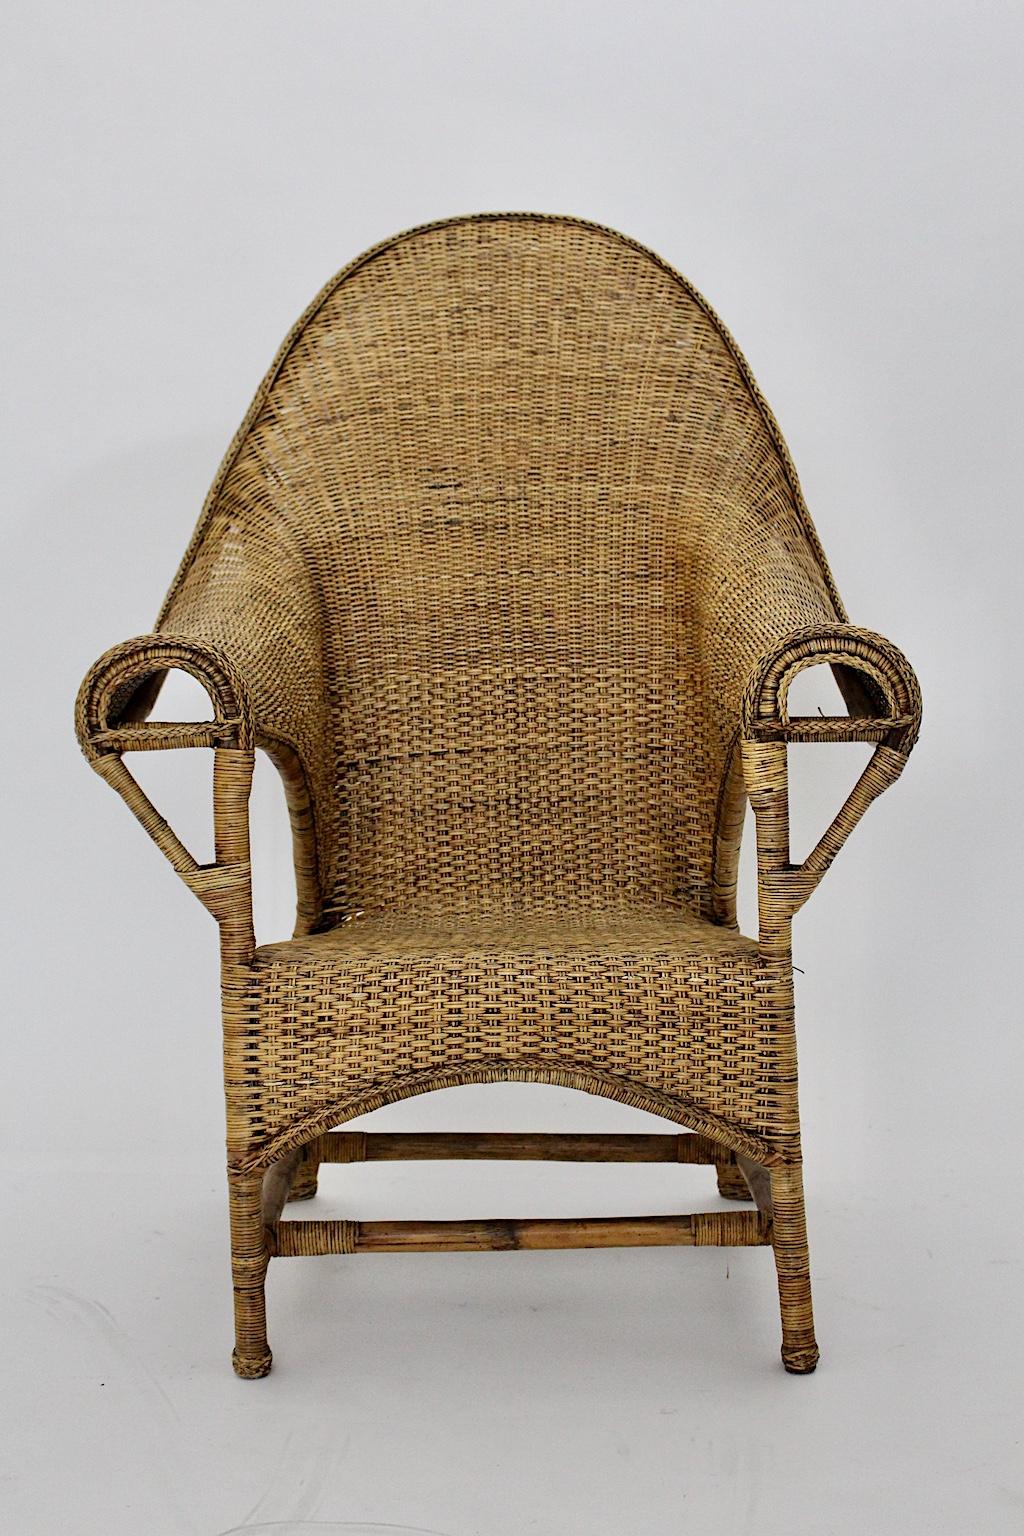 vintage wicker chair